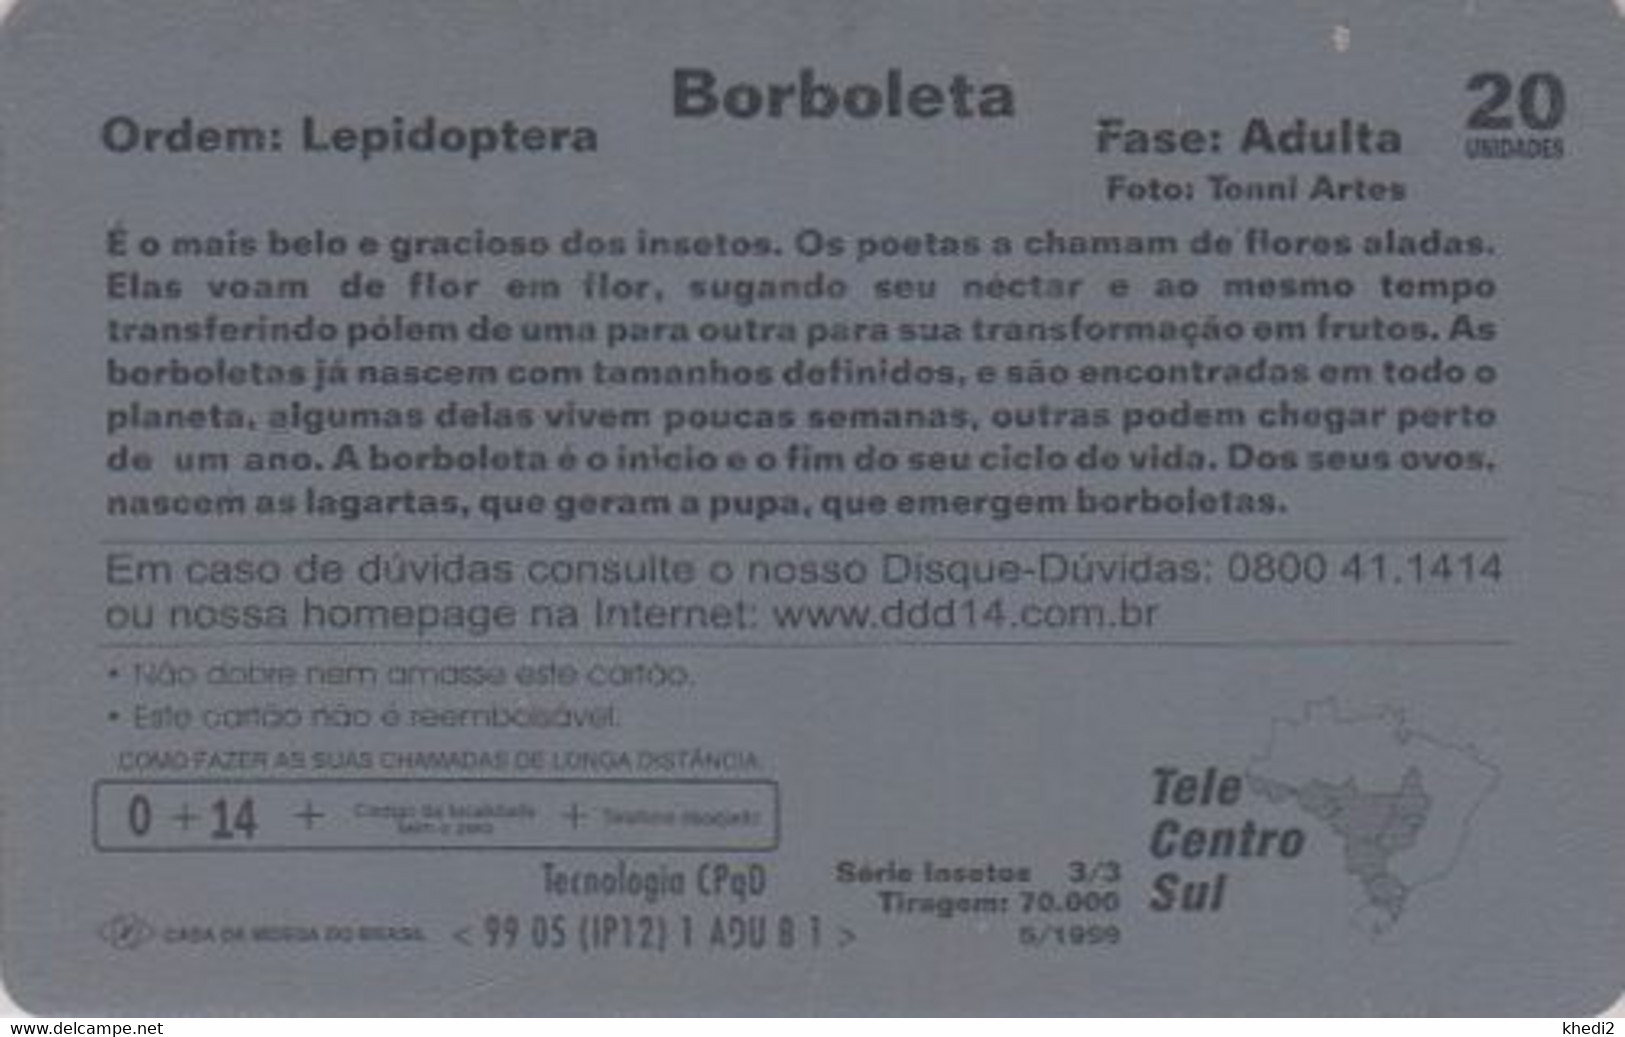 Télécarte BRESIL - ANIMAL - PAPILLON / Série Insectes 3/3 - BUTTERFLY BRAZIL BRASIL Phonecard / Teleacre - 69 - Brasilien